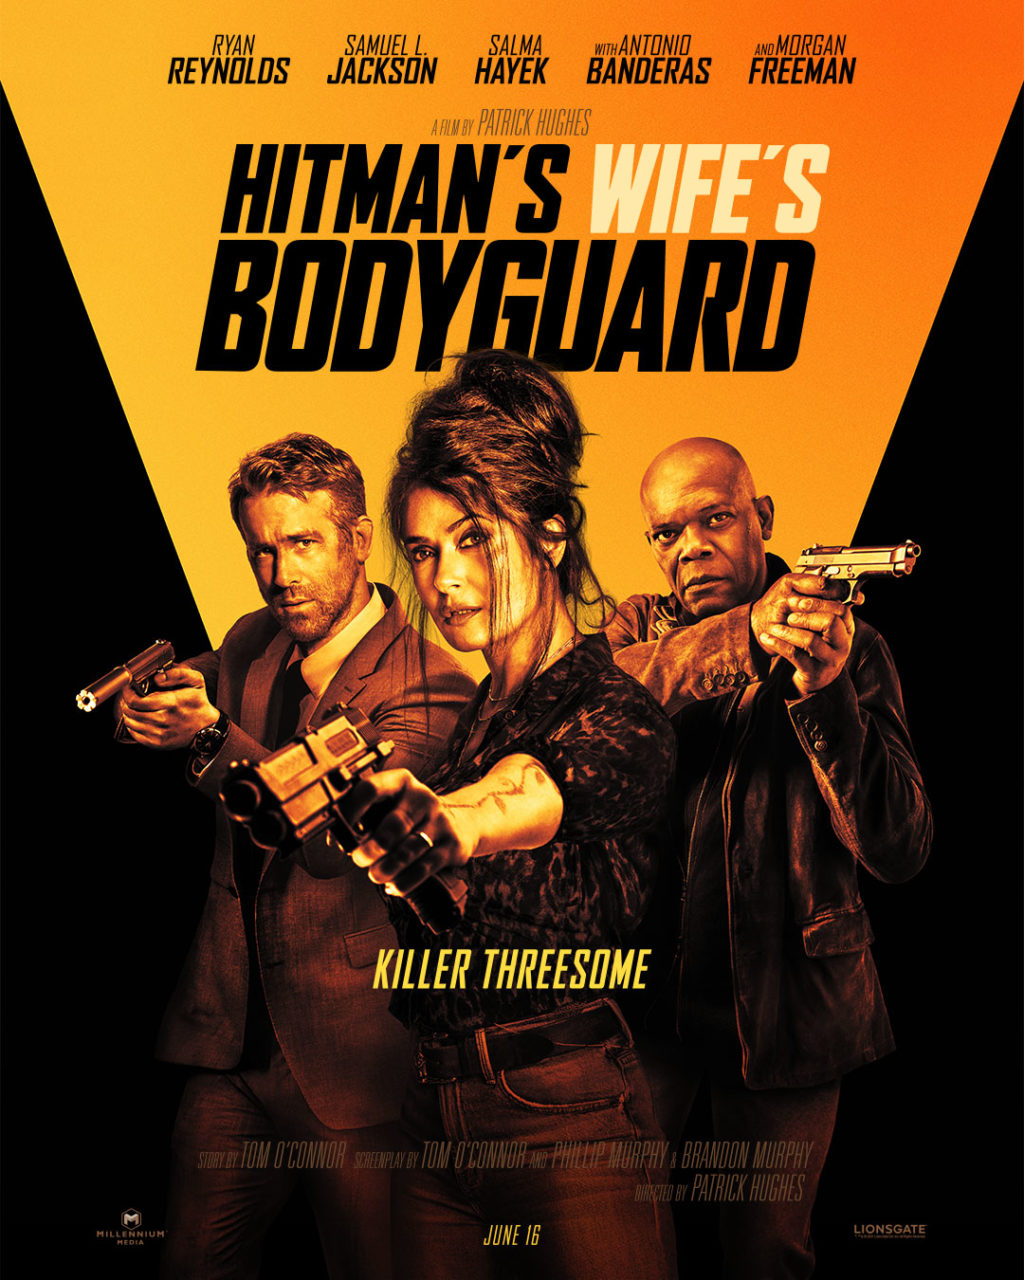 Hitman's Wife's Bodyguard poster (Lionsgate)